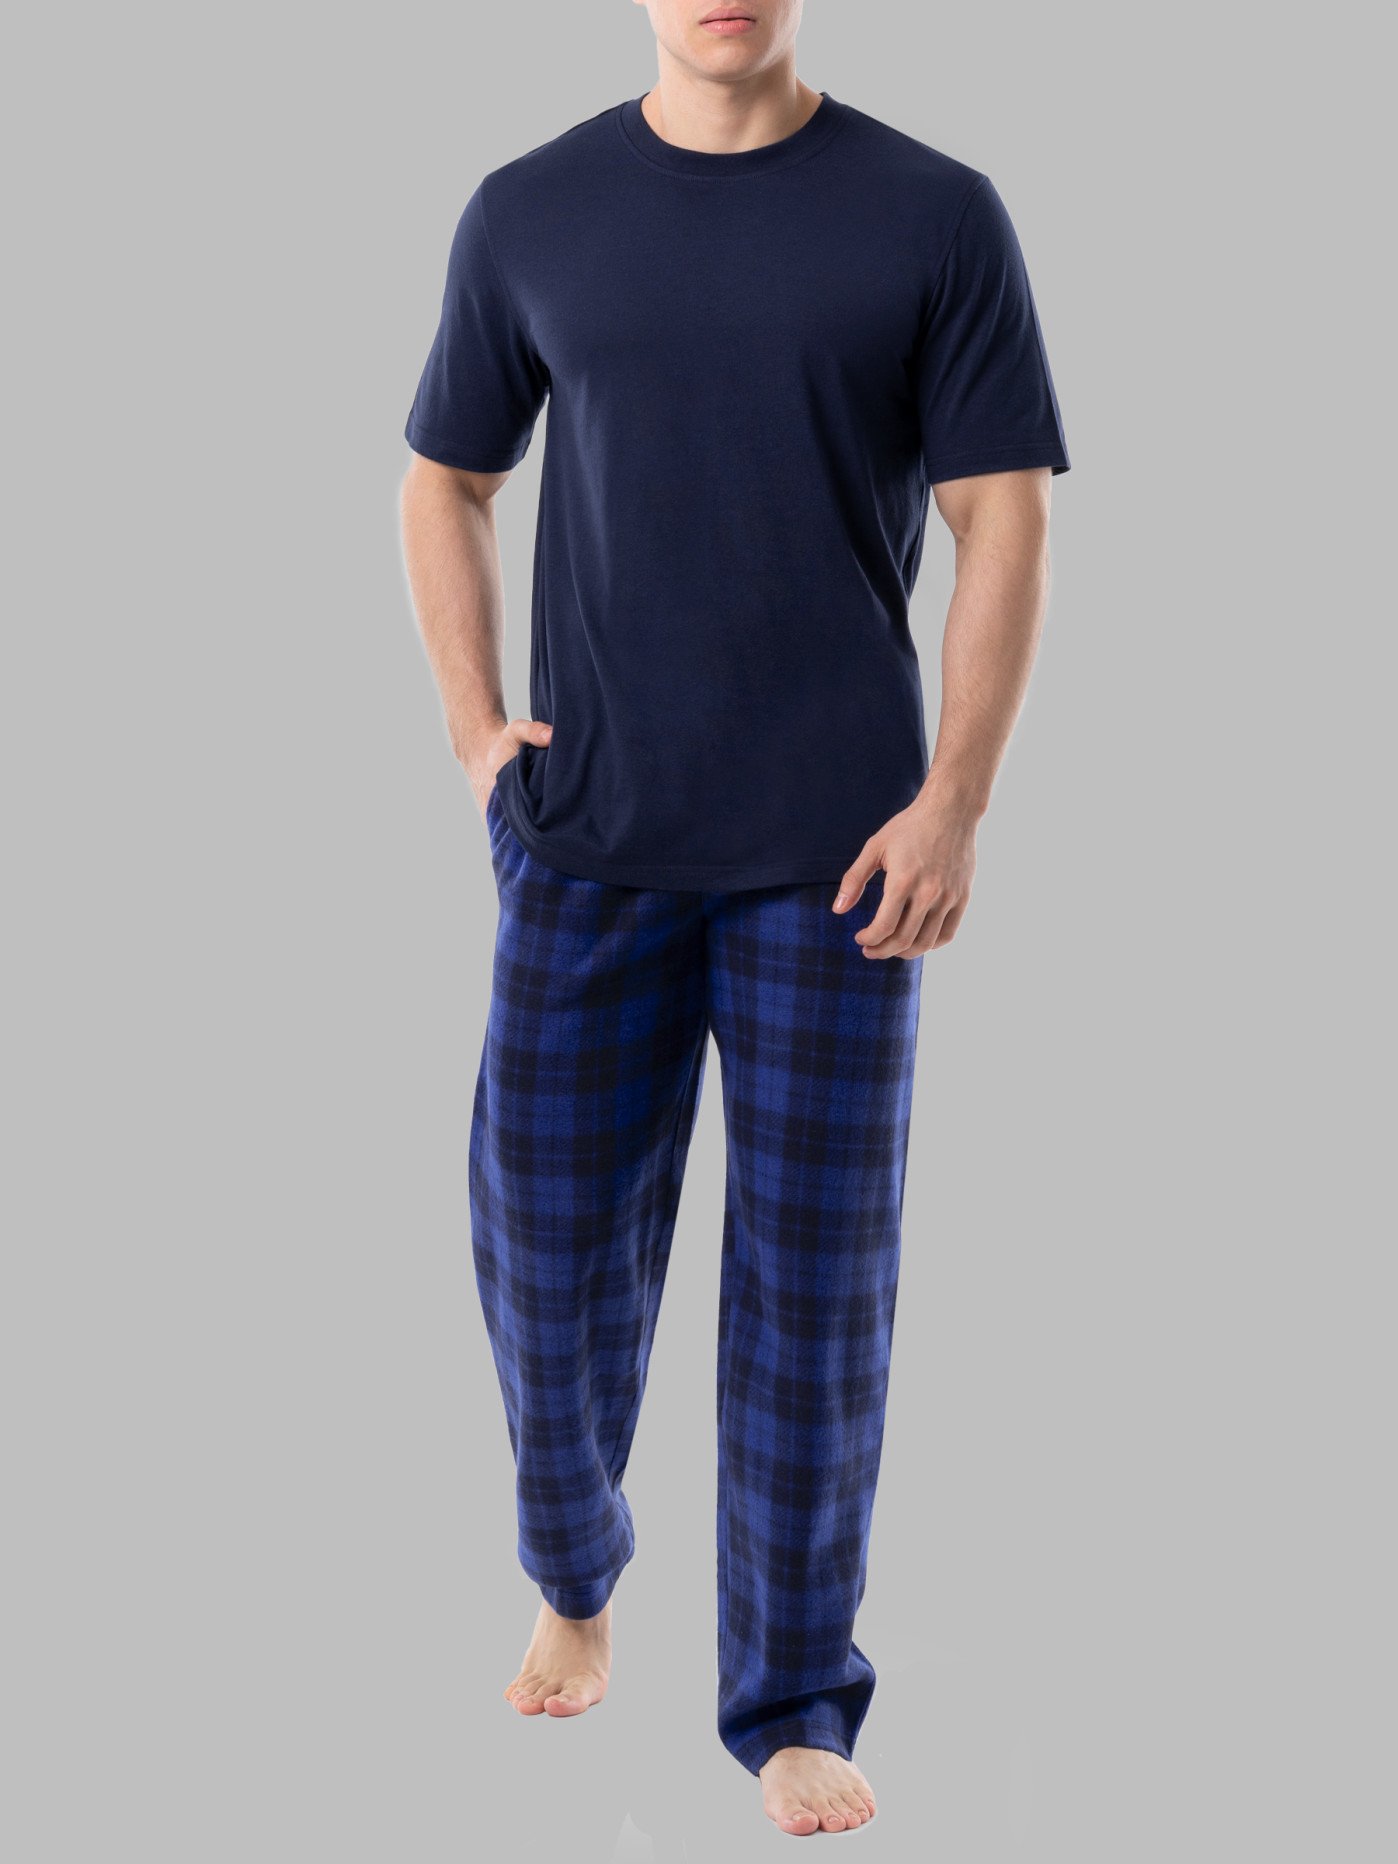 Just Love Women's Thermal Underwear Pajamas Set (Camouflage